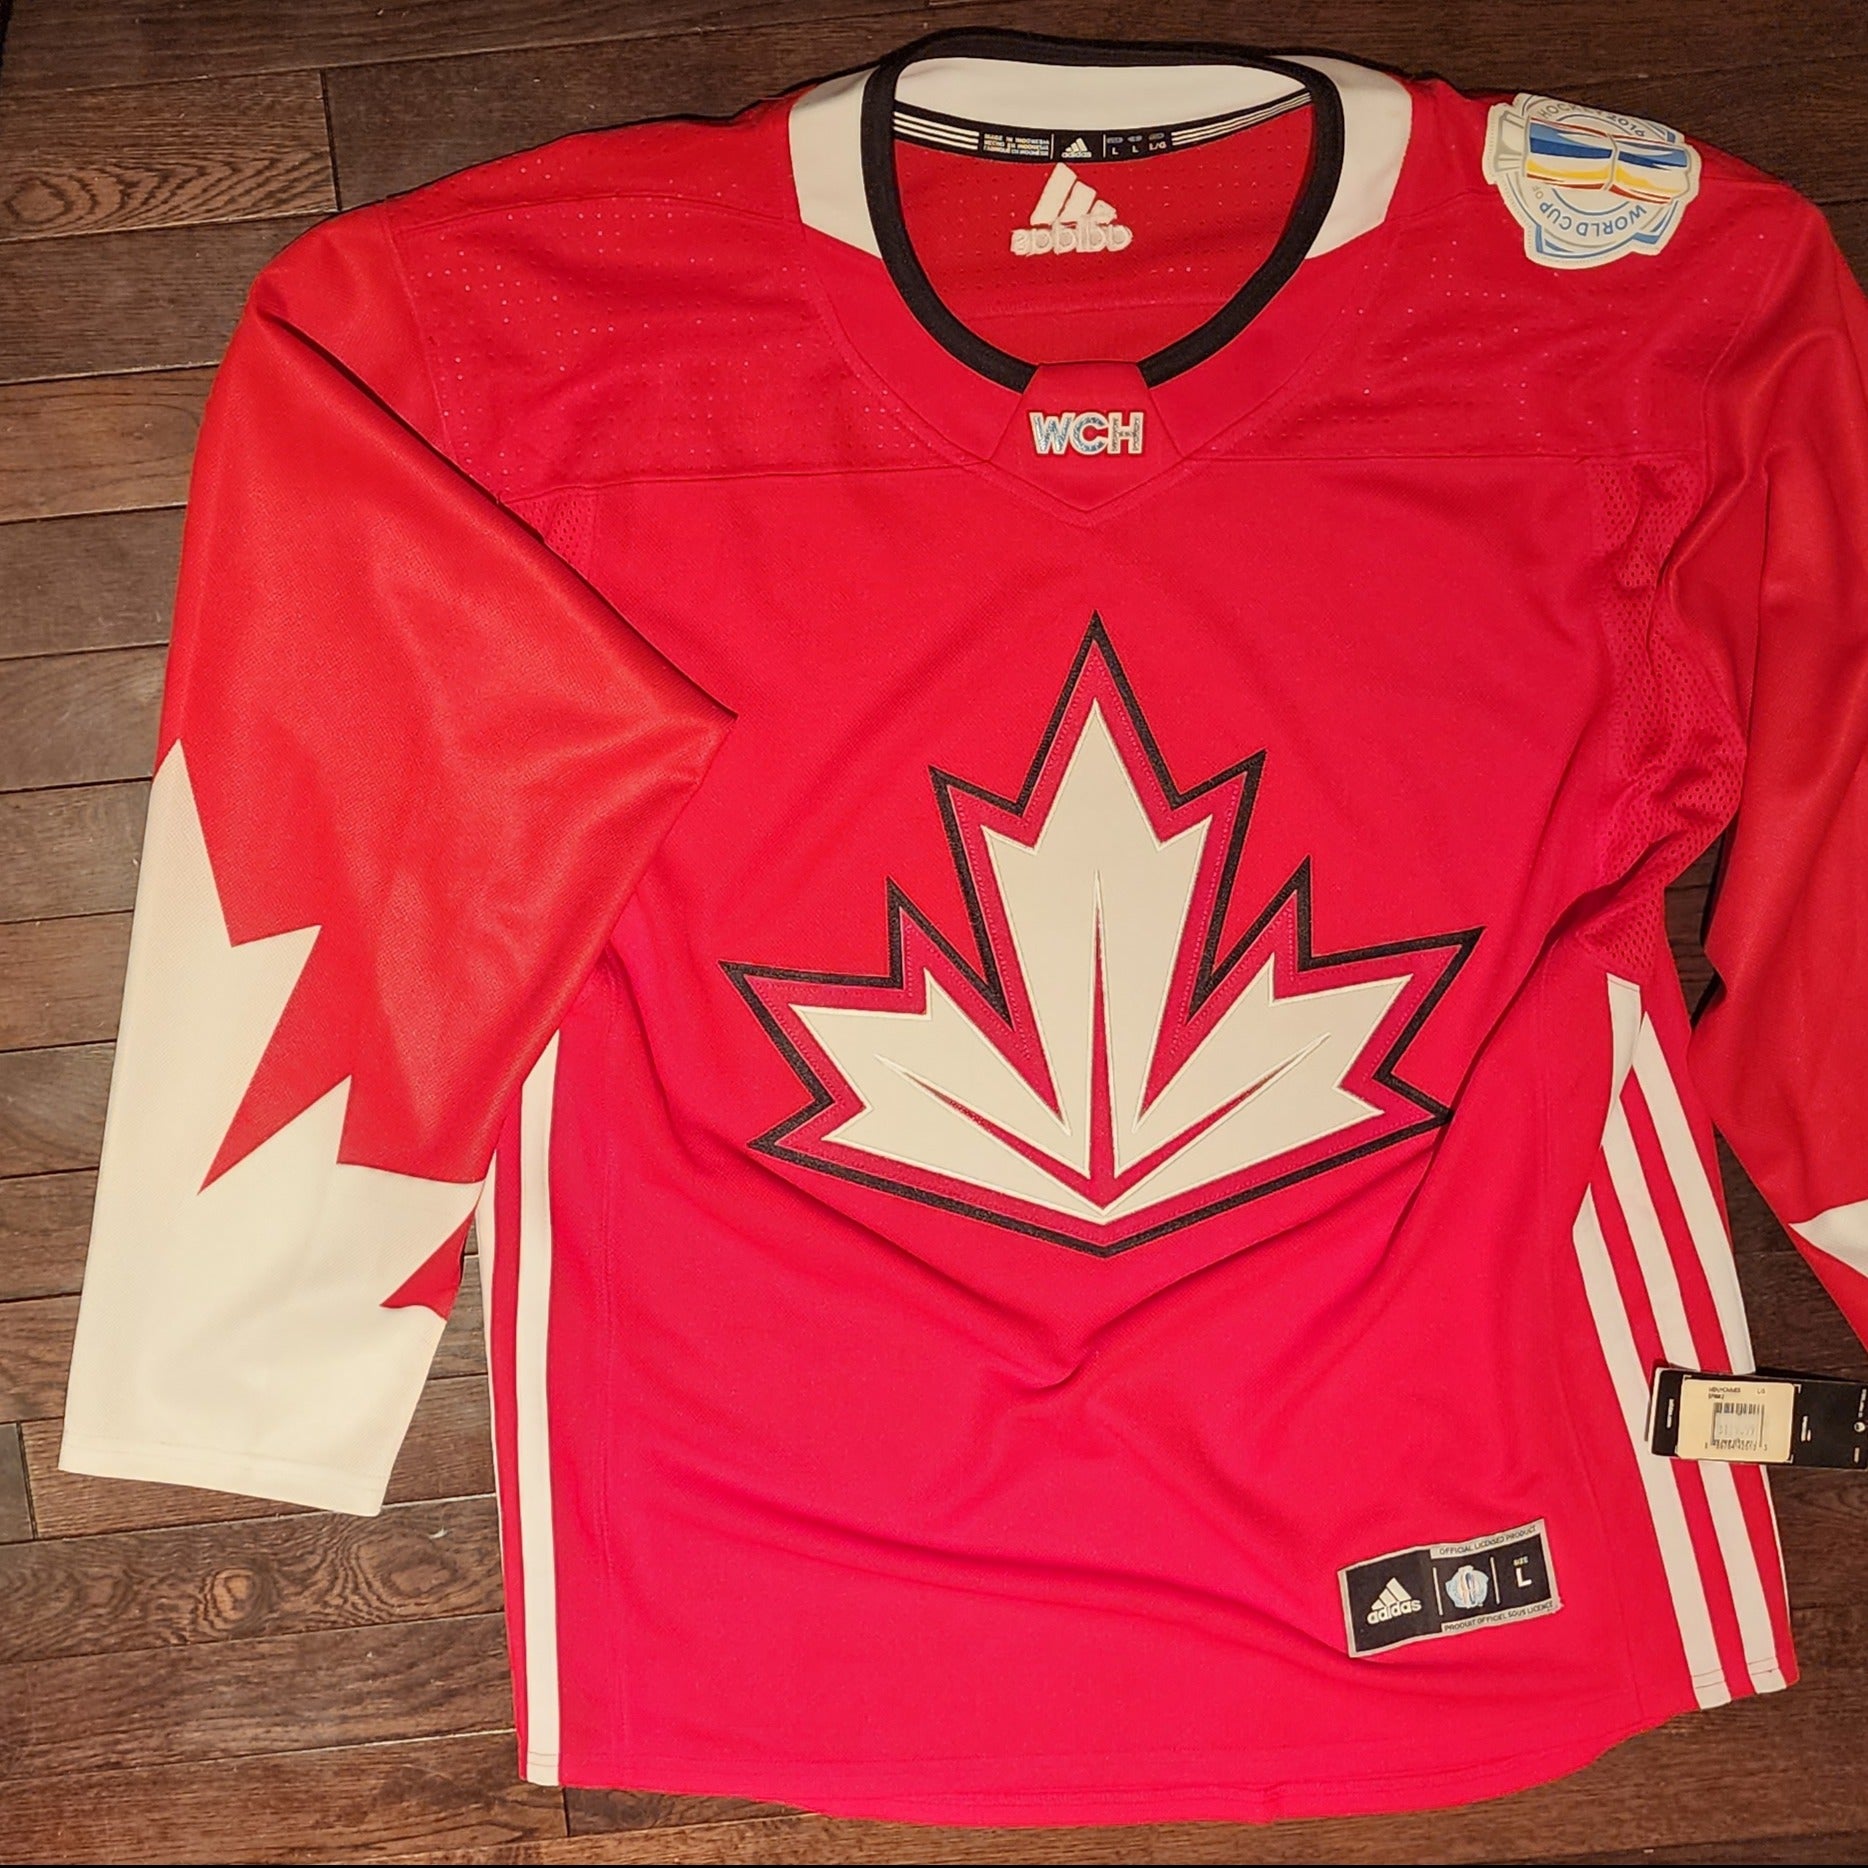 Best 2002 Team Canada Nike Olympic Jersey for sale in Winkler